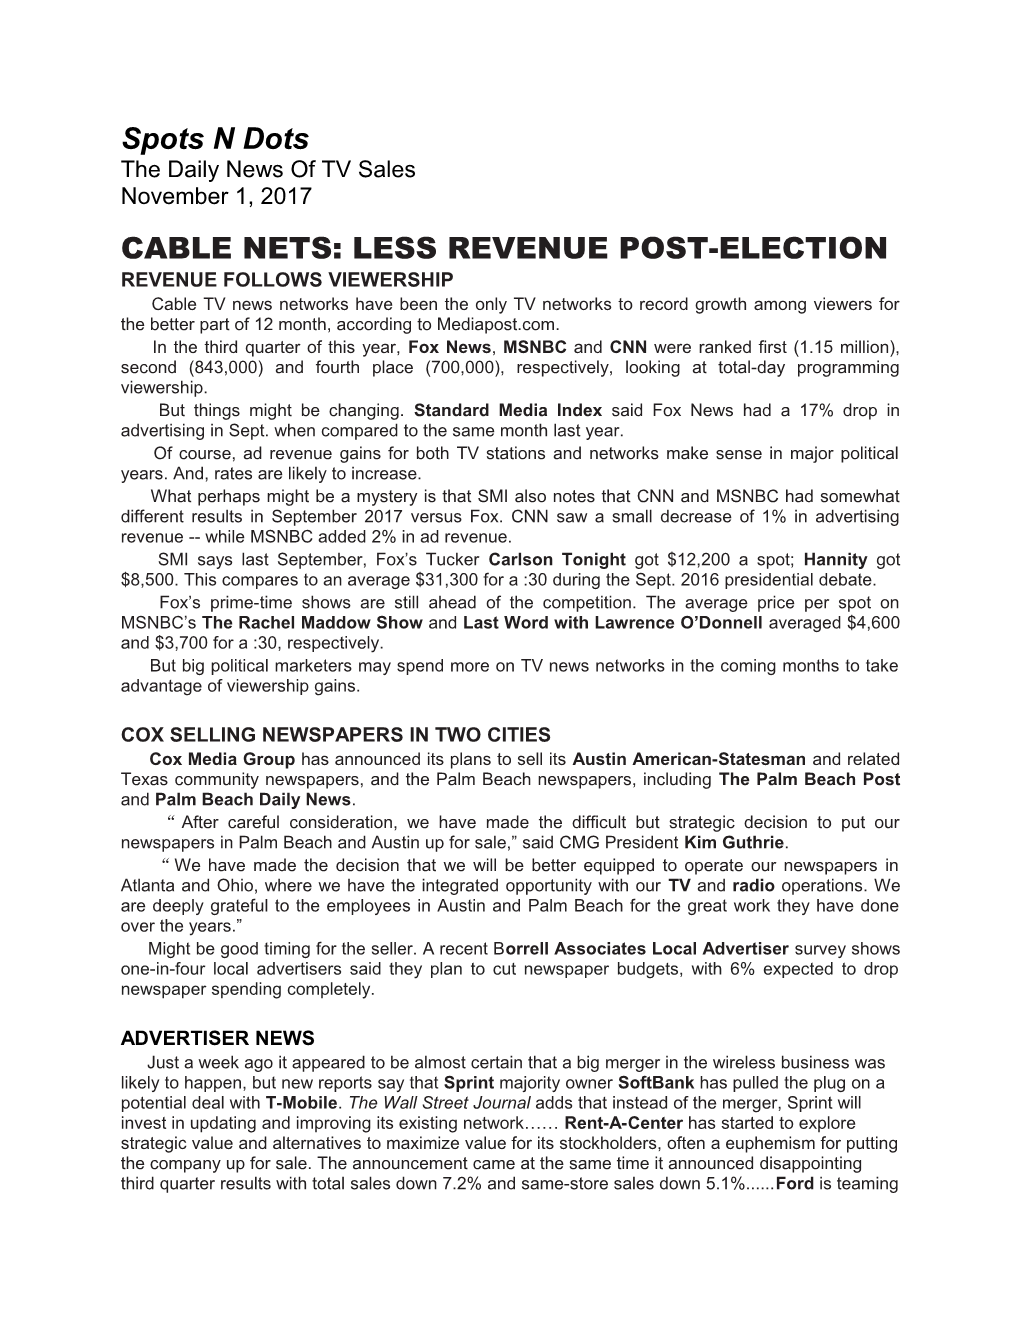 Cable Nets: Less Revenue Post-Election